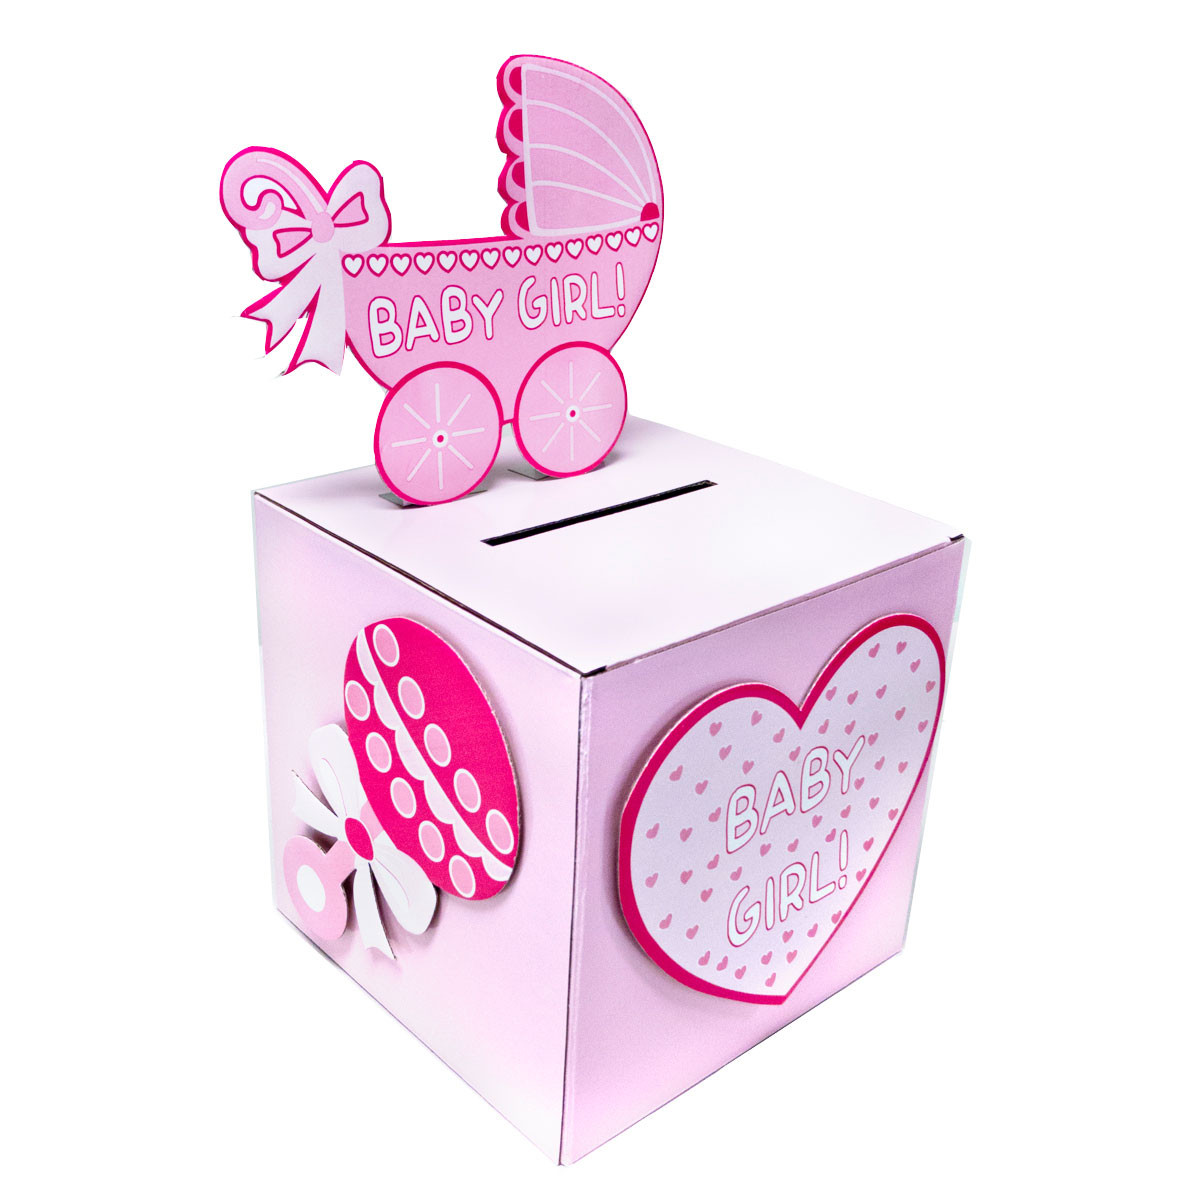 Baby Shower Gift Card Ideas
 BabyShower Wishing well card t or money box BOY GIRL